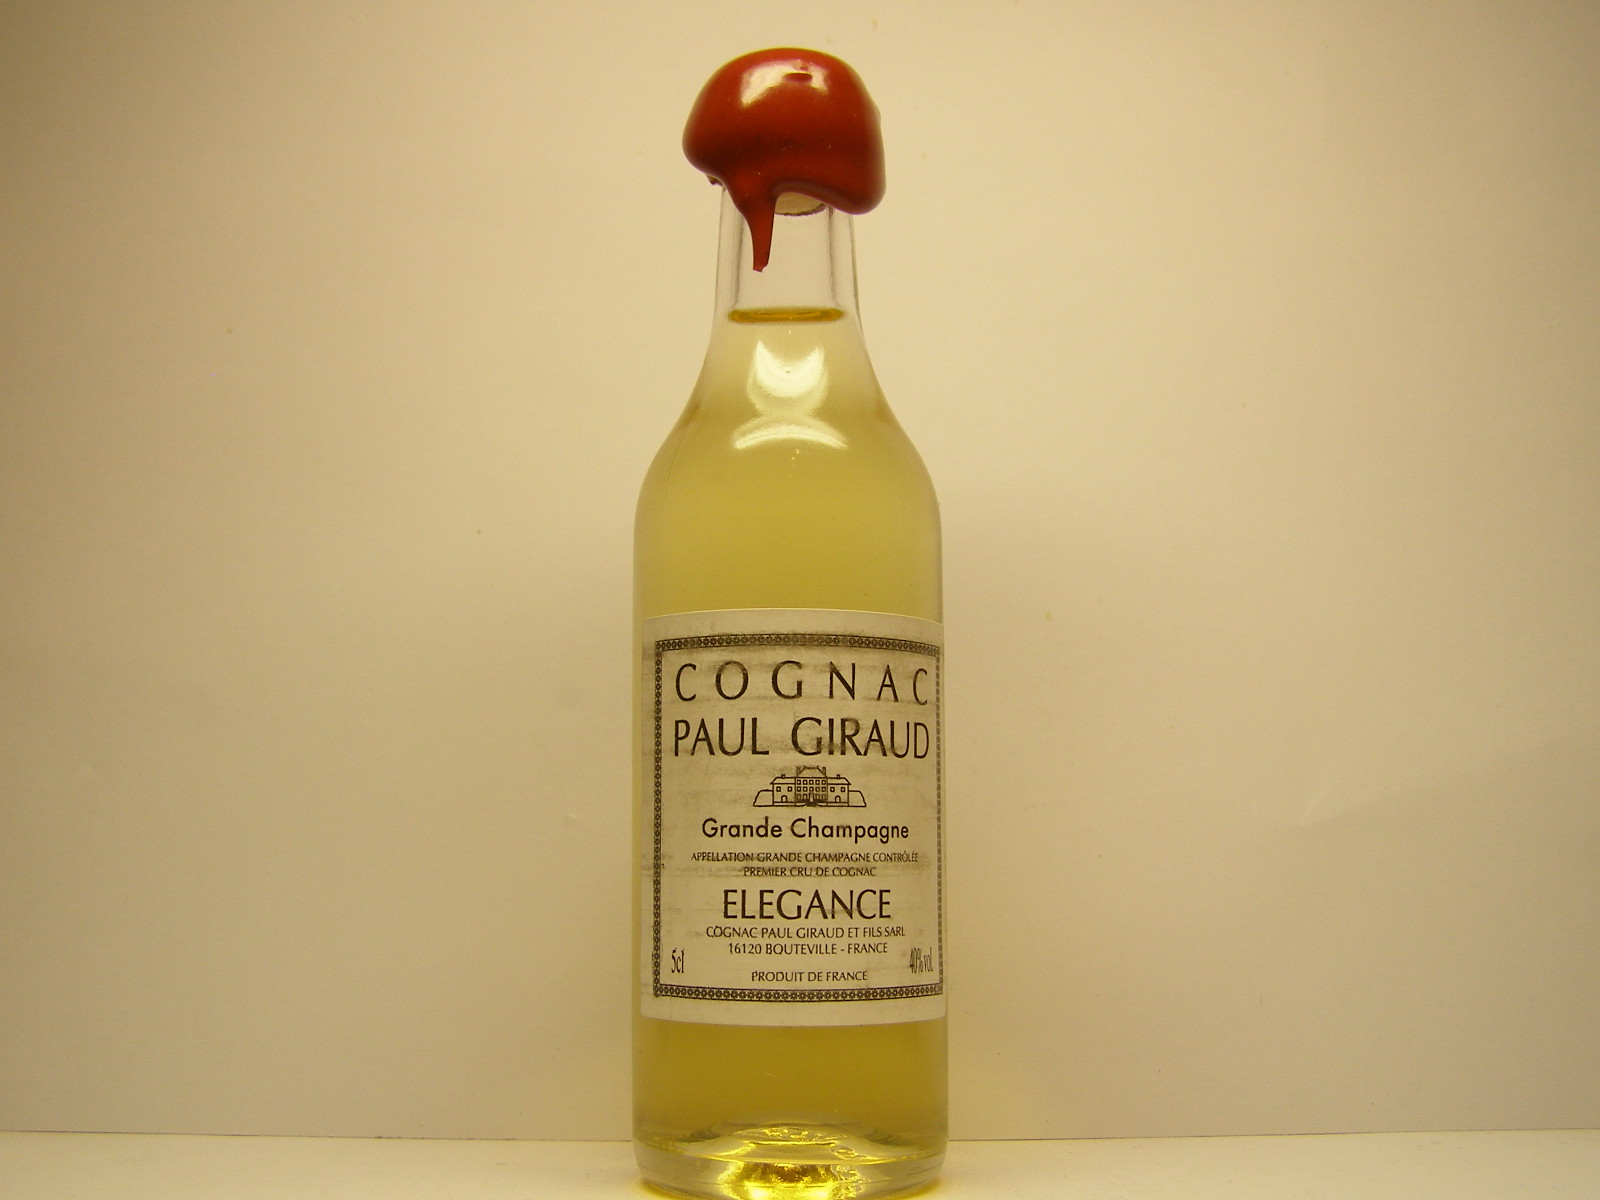 ELEGANCE Grande Champagne Cognac